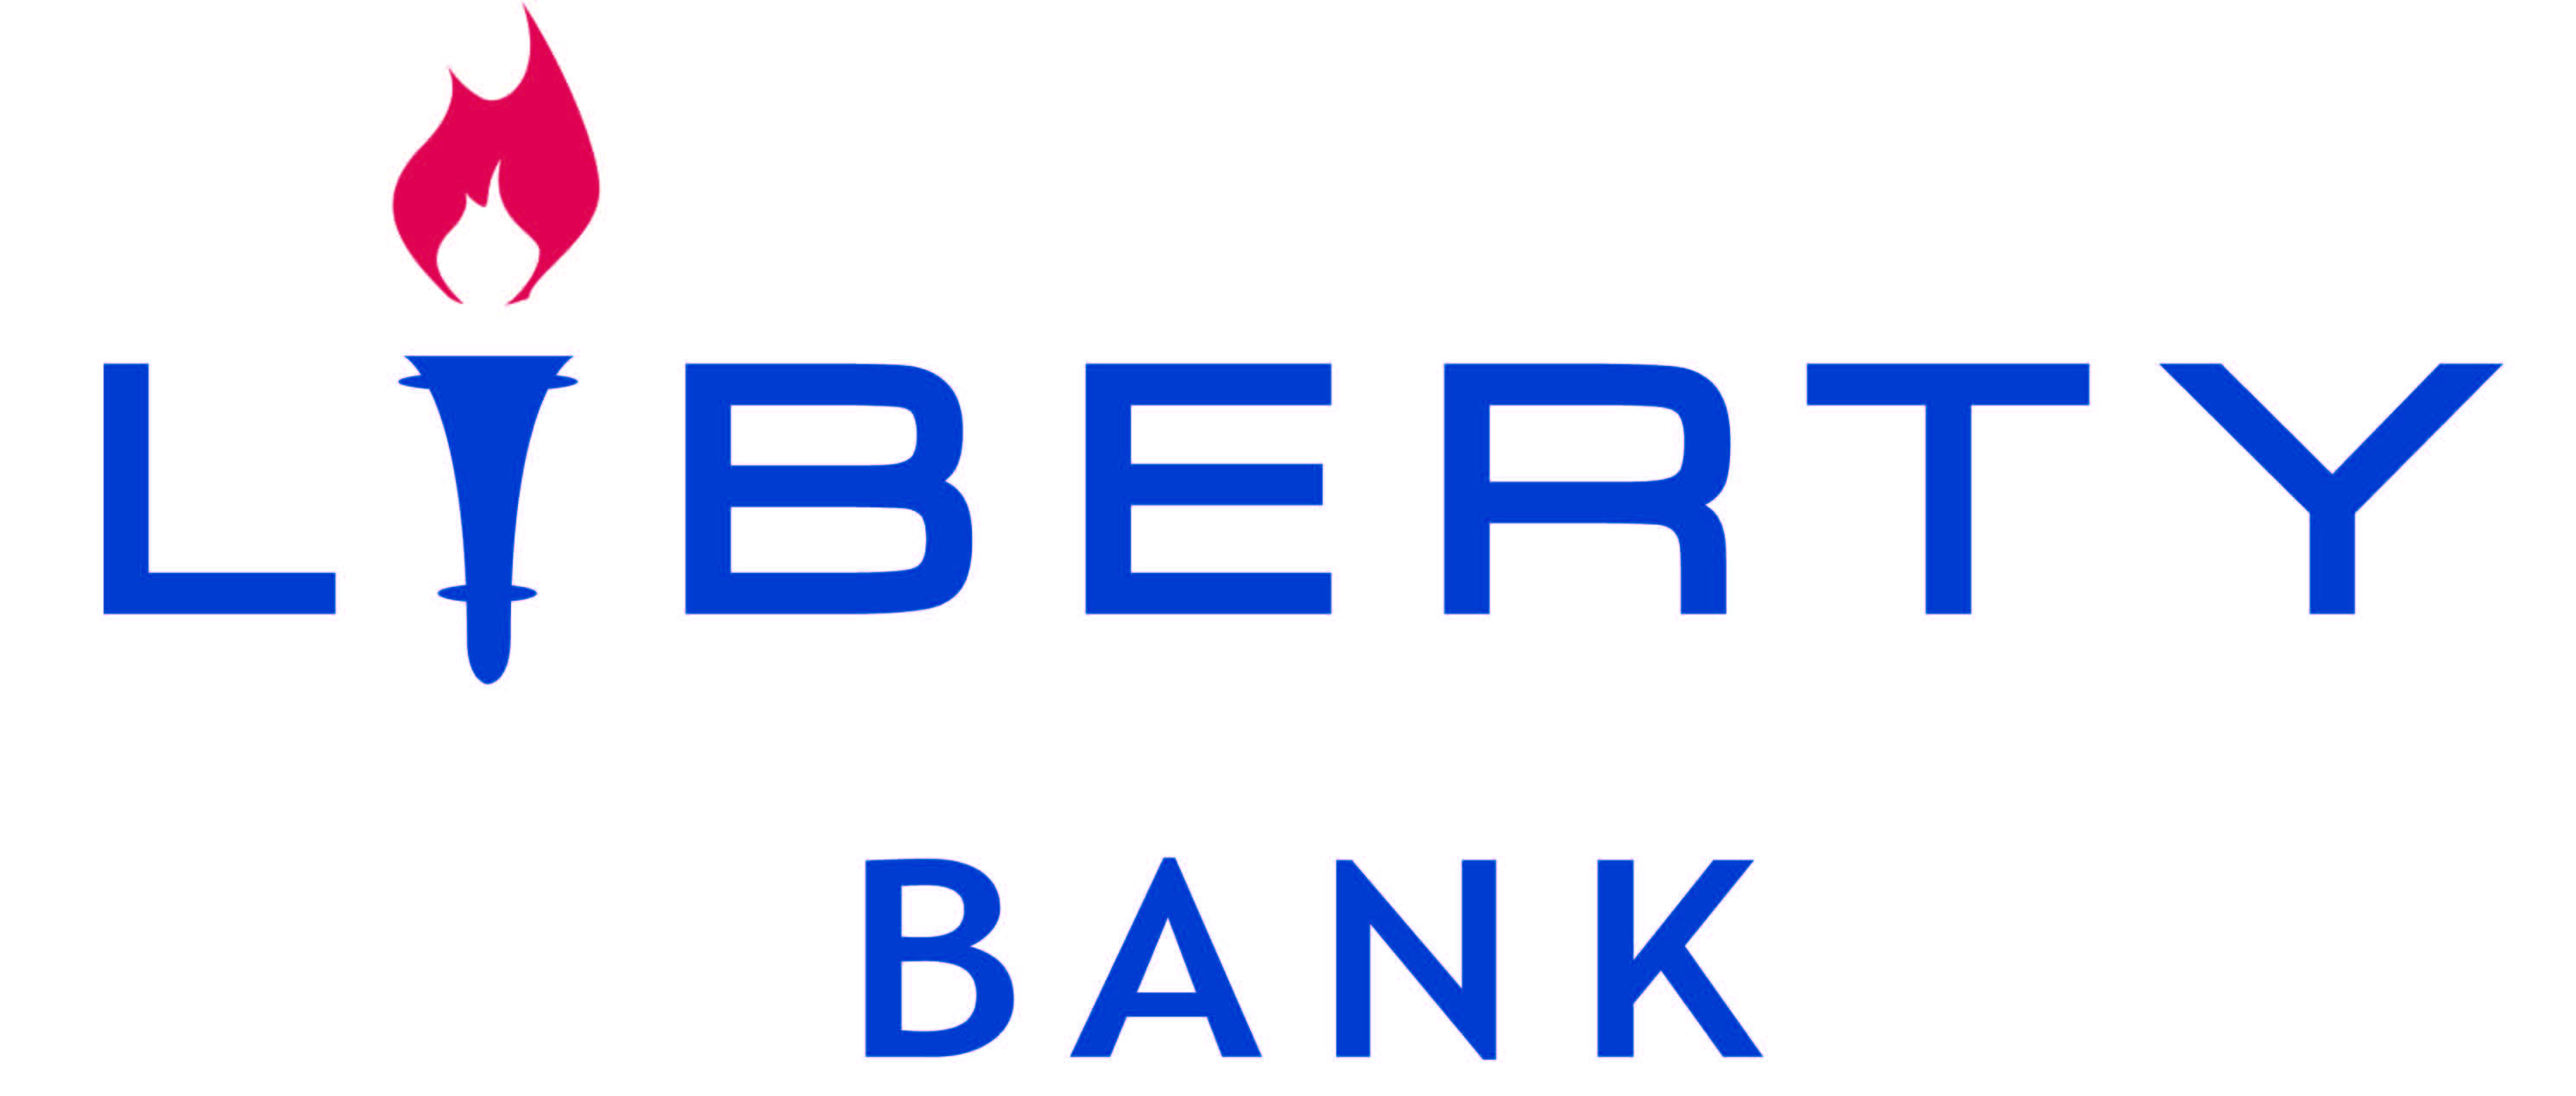 Liberty Bank